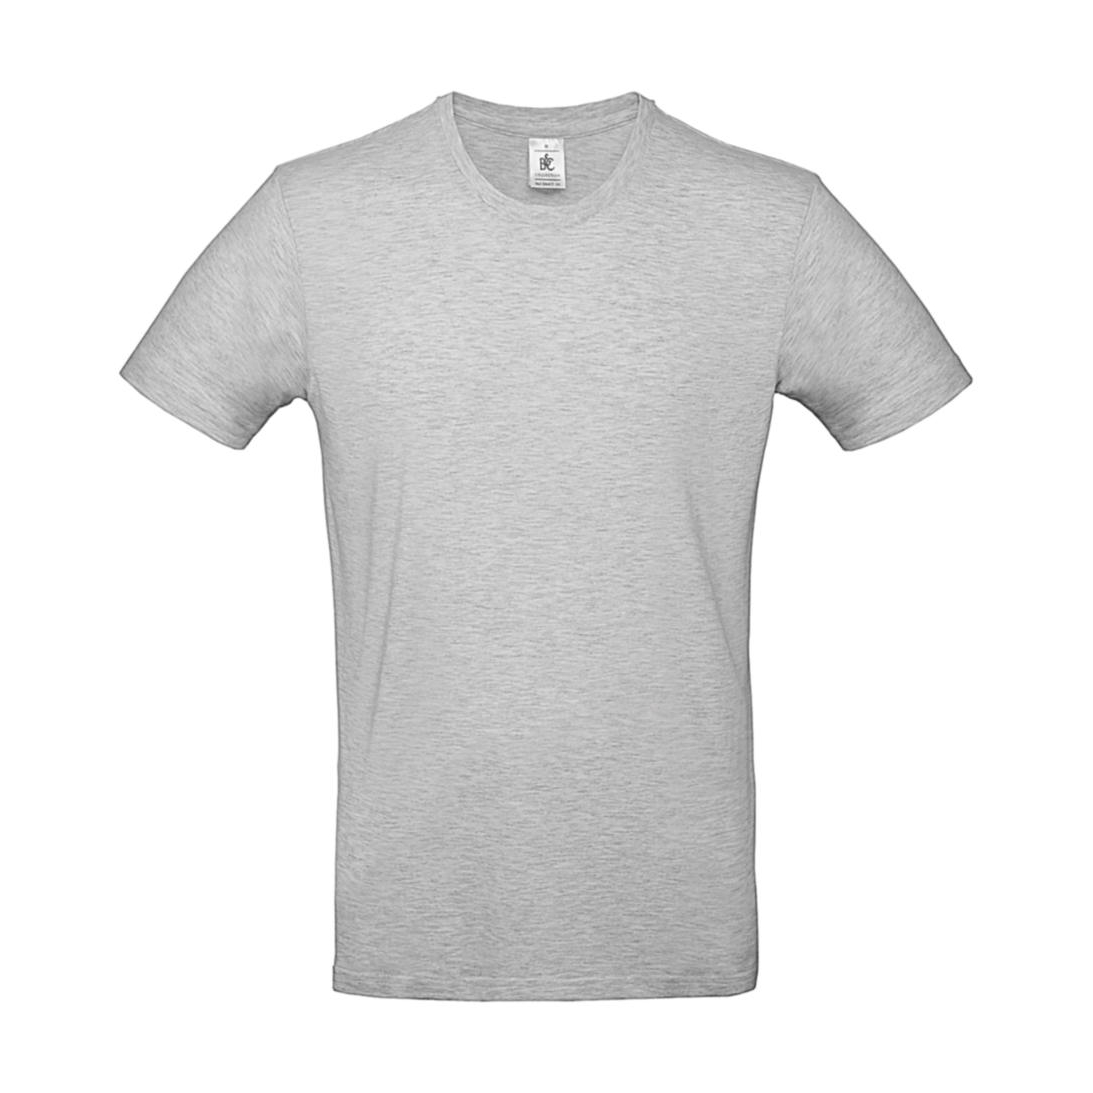 Triko pánské B&C E190 T-Shirt - světle šedé, XL